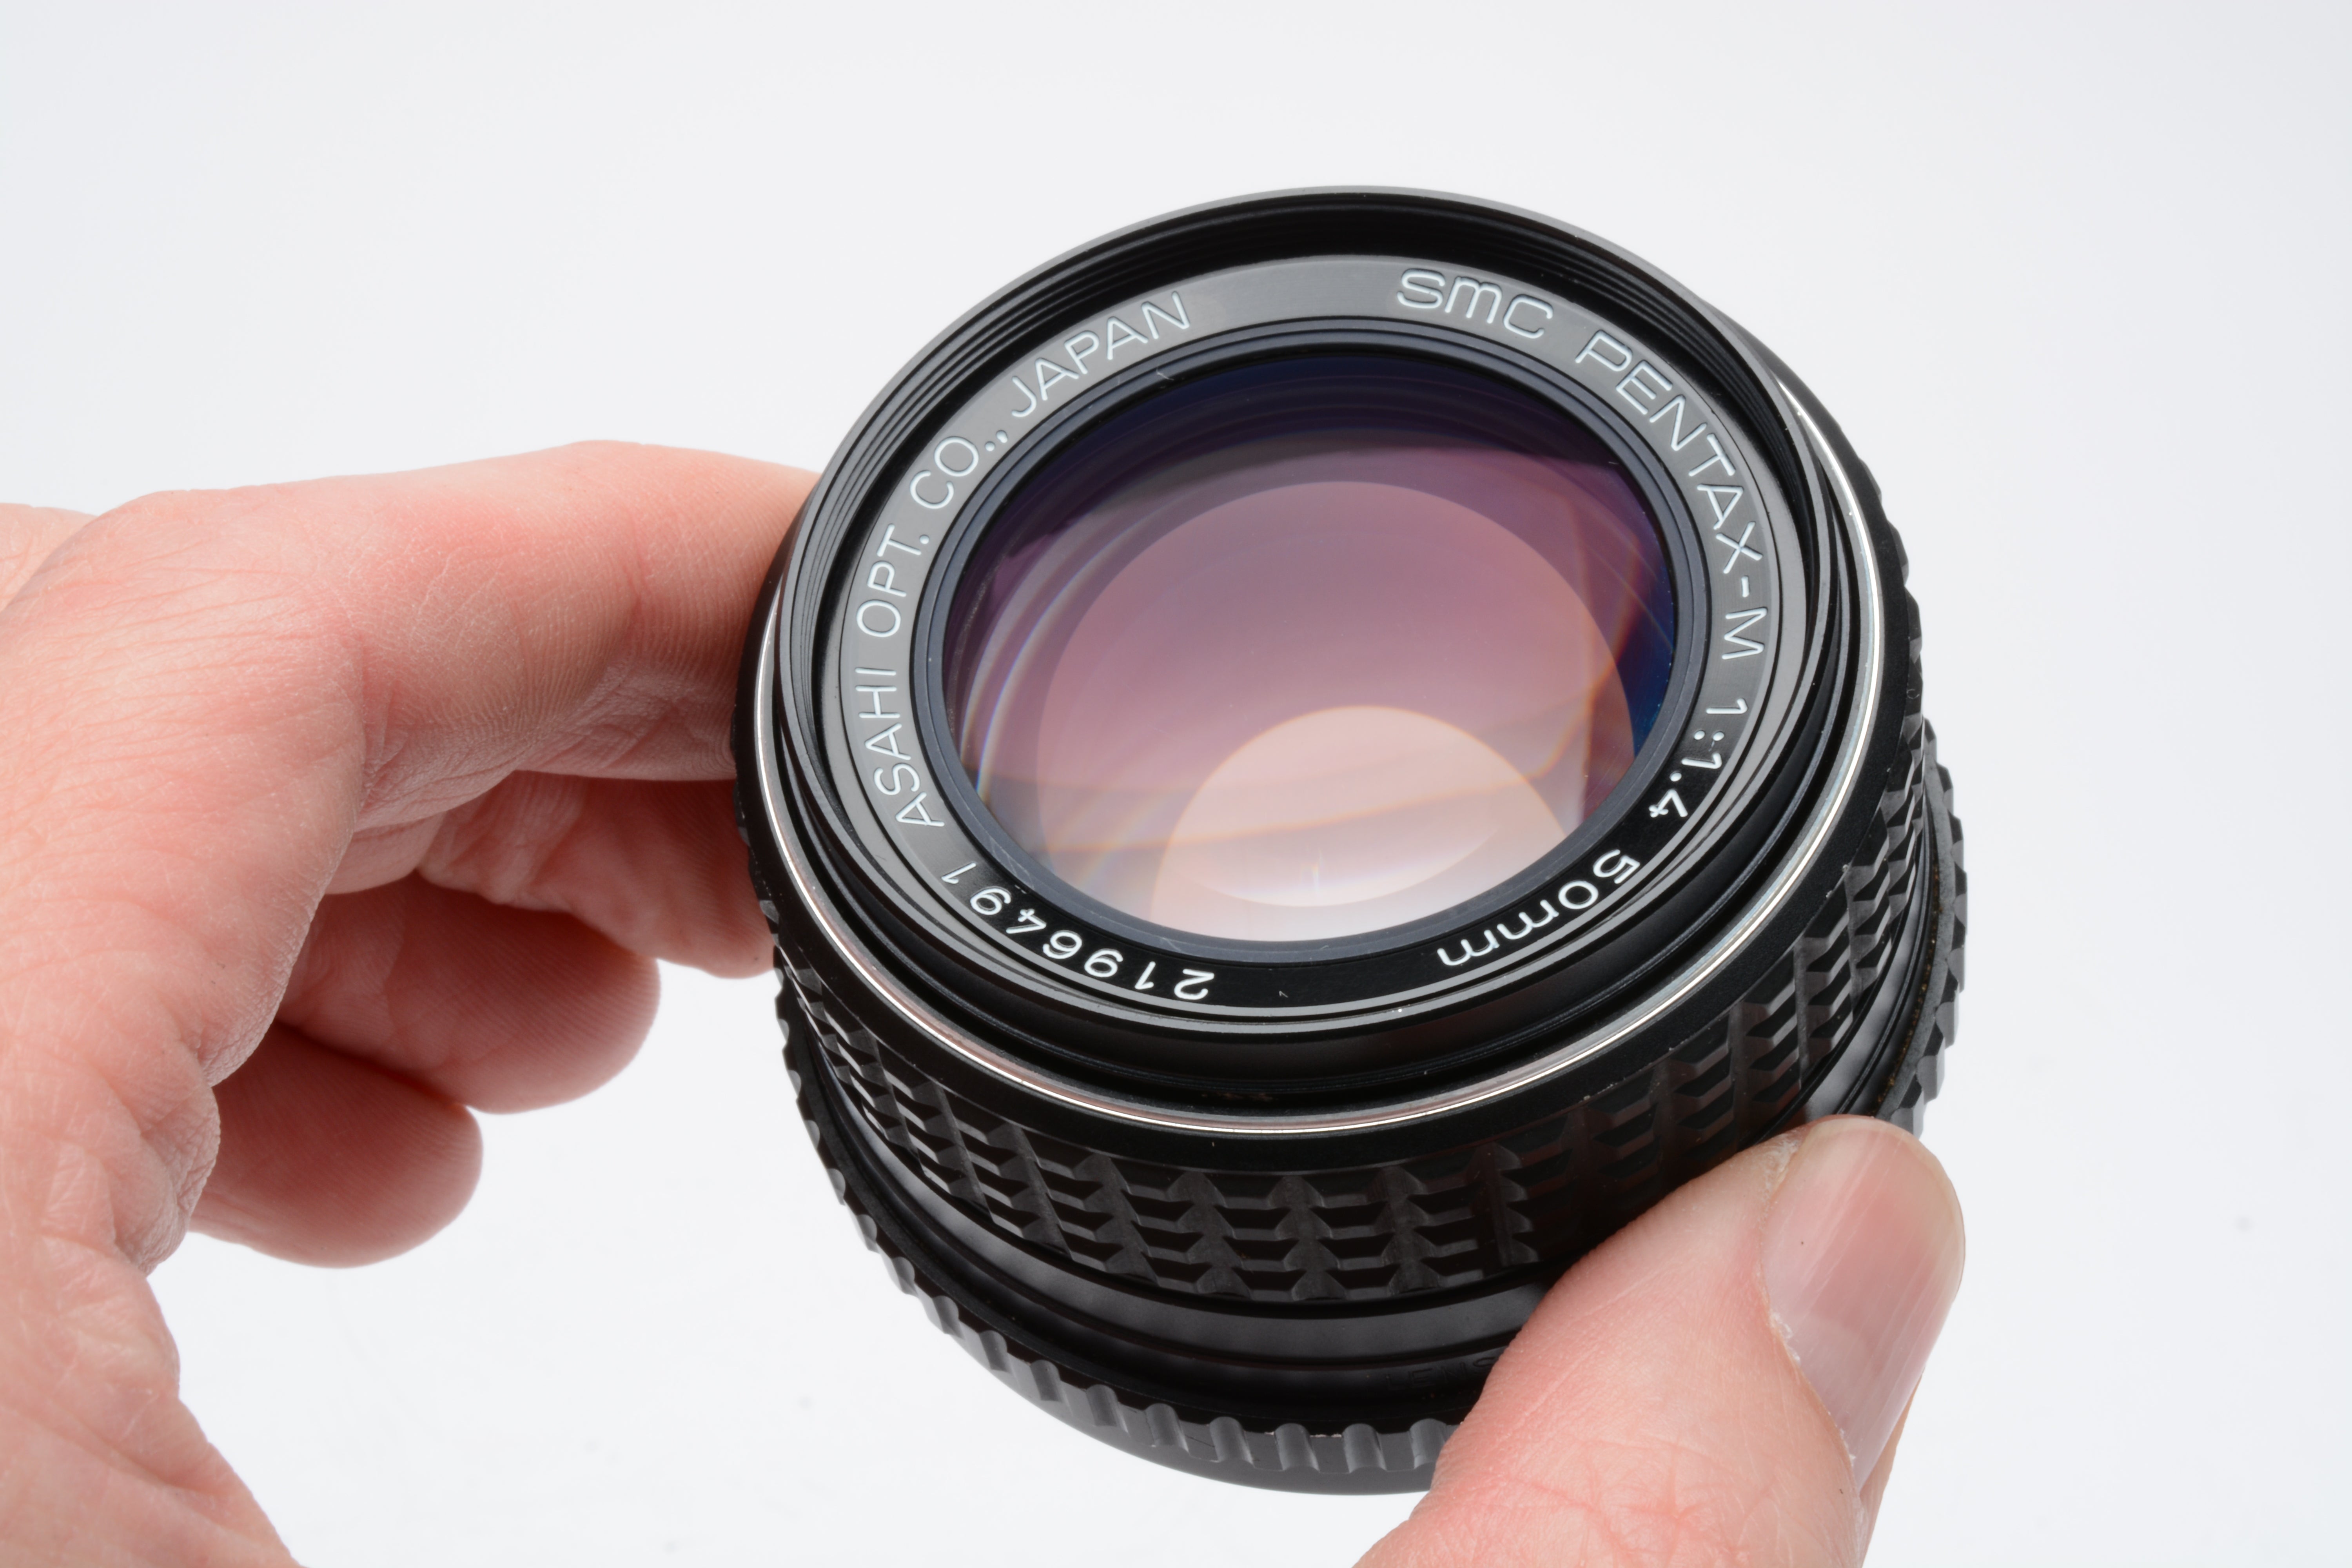 Pentax-M SMC 50mm f1.4 prime lens, caps, Skylight filter + case, clean & sharp